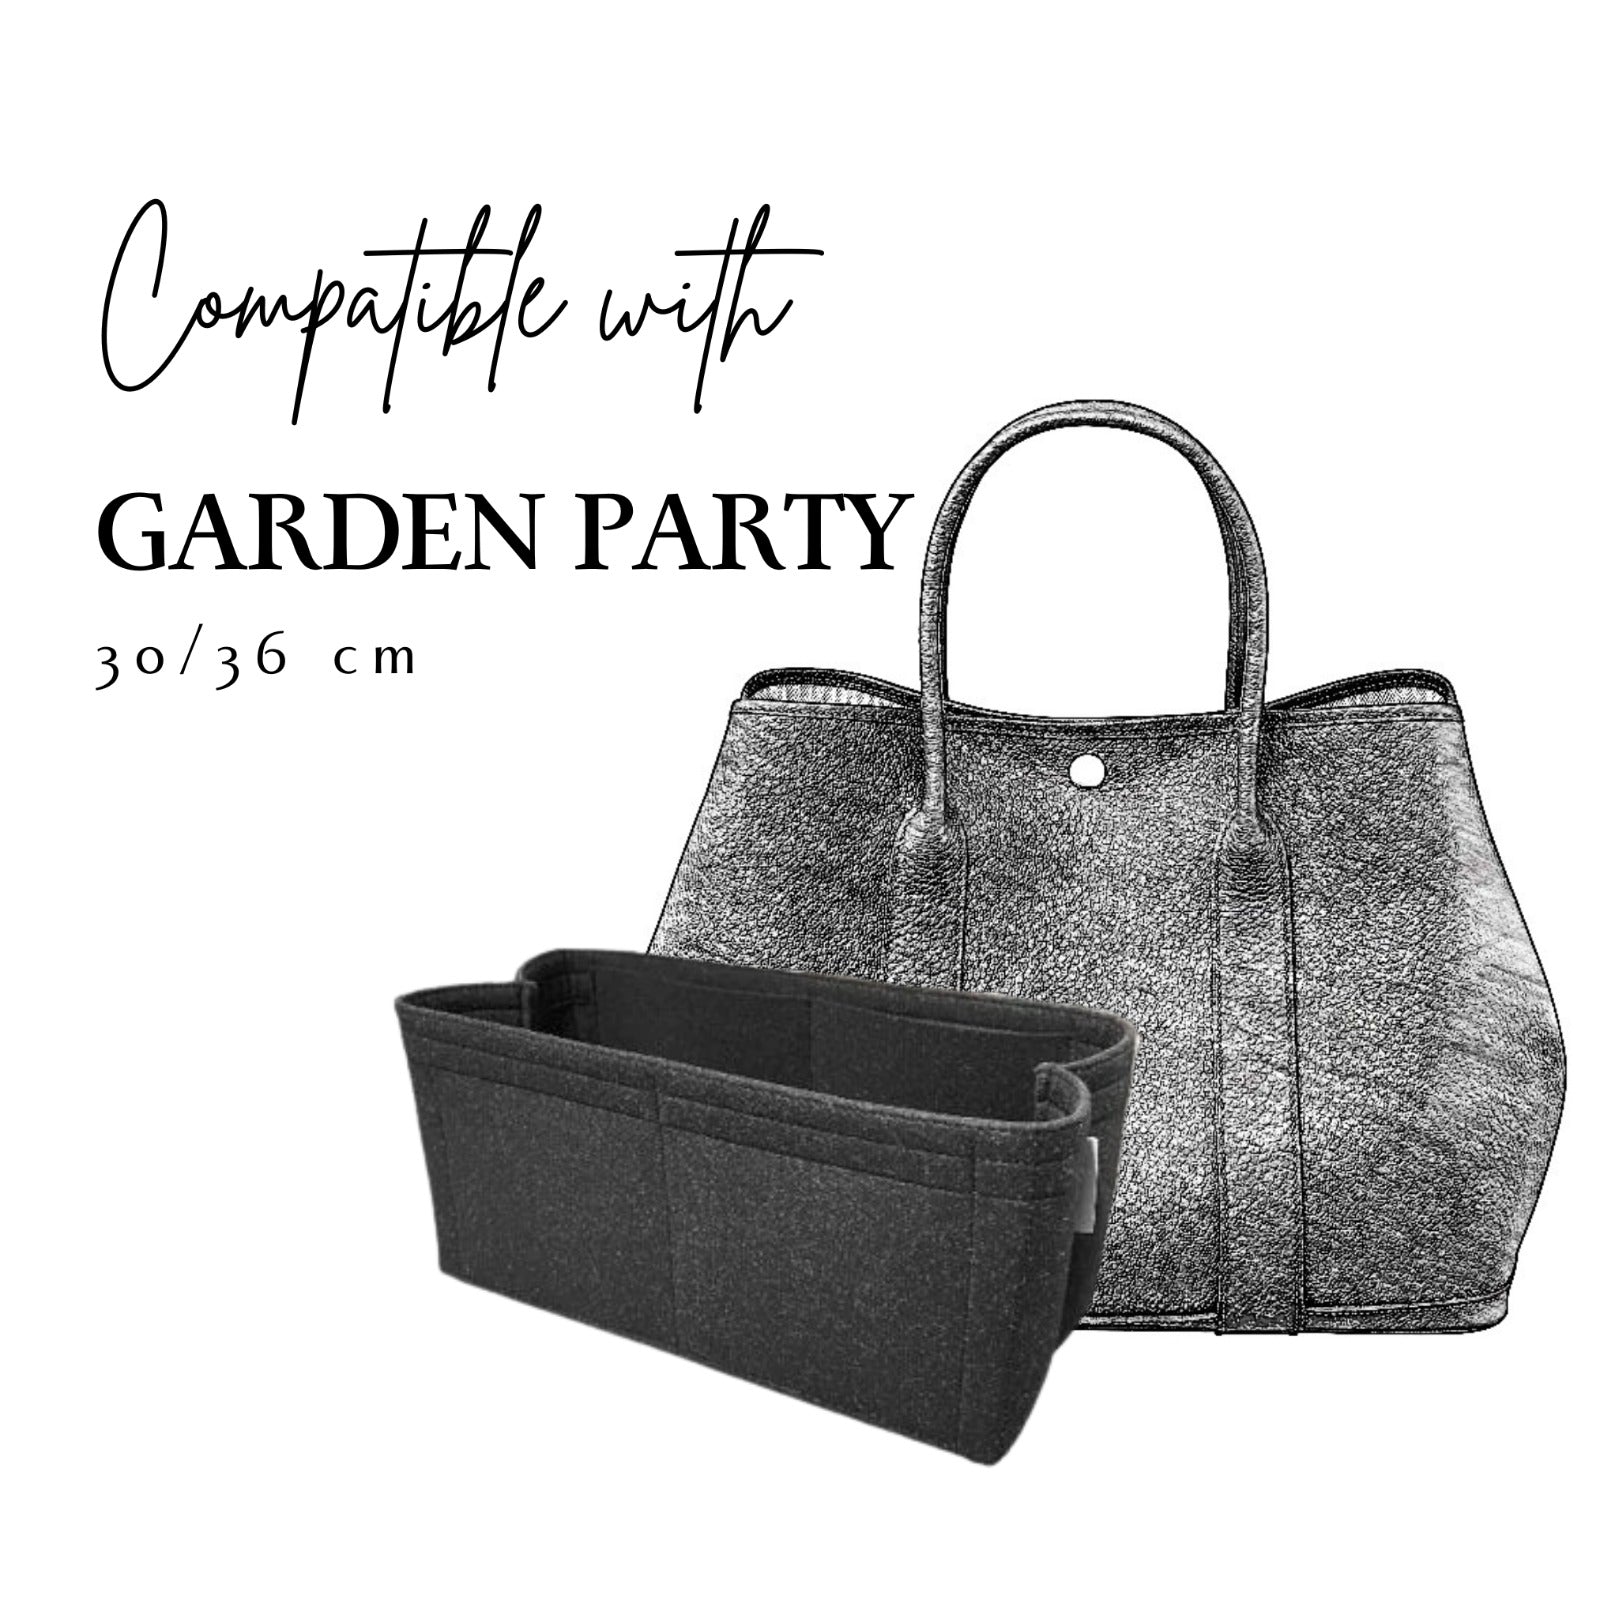 Hermes Garden Party Bag Models Organizer Insert, Classic Model Purse  Organizer with Ipad Pocket